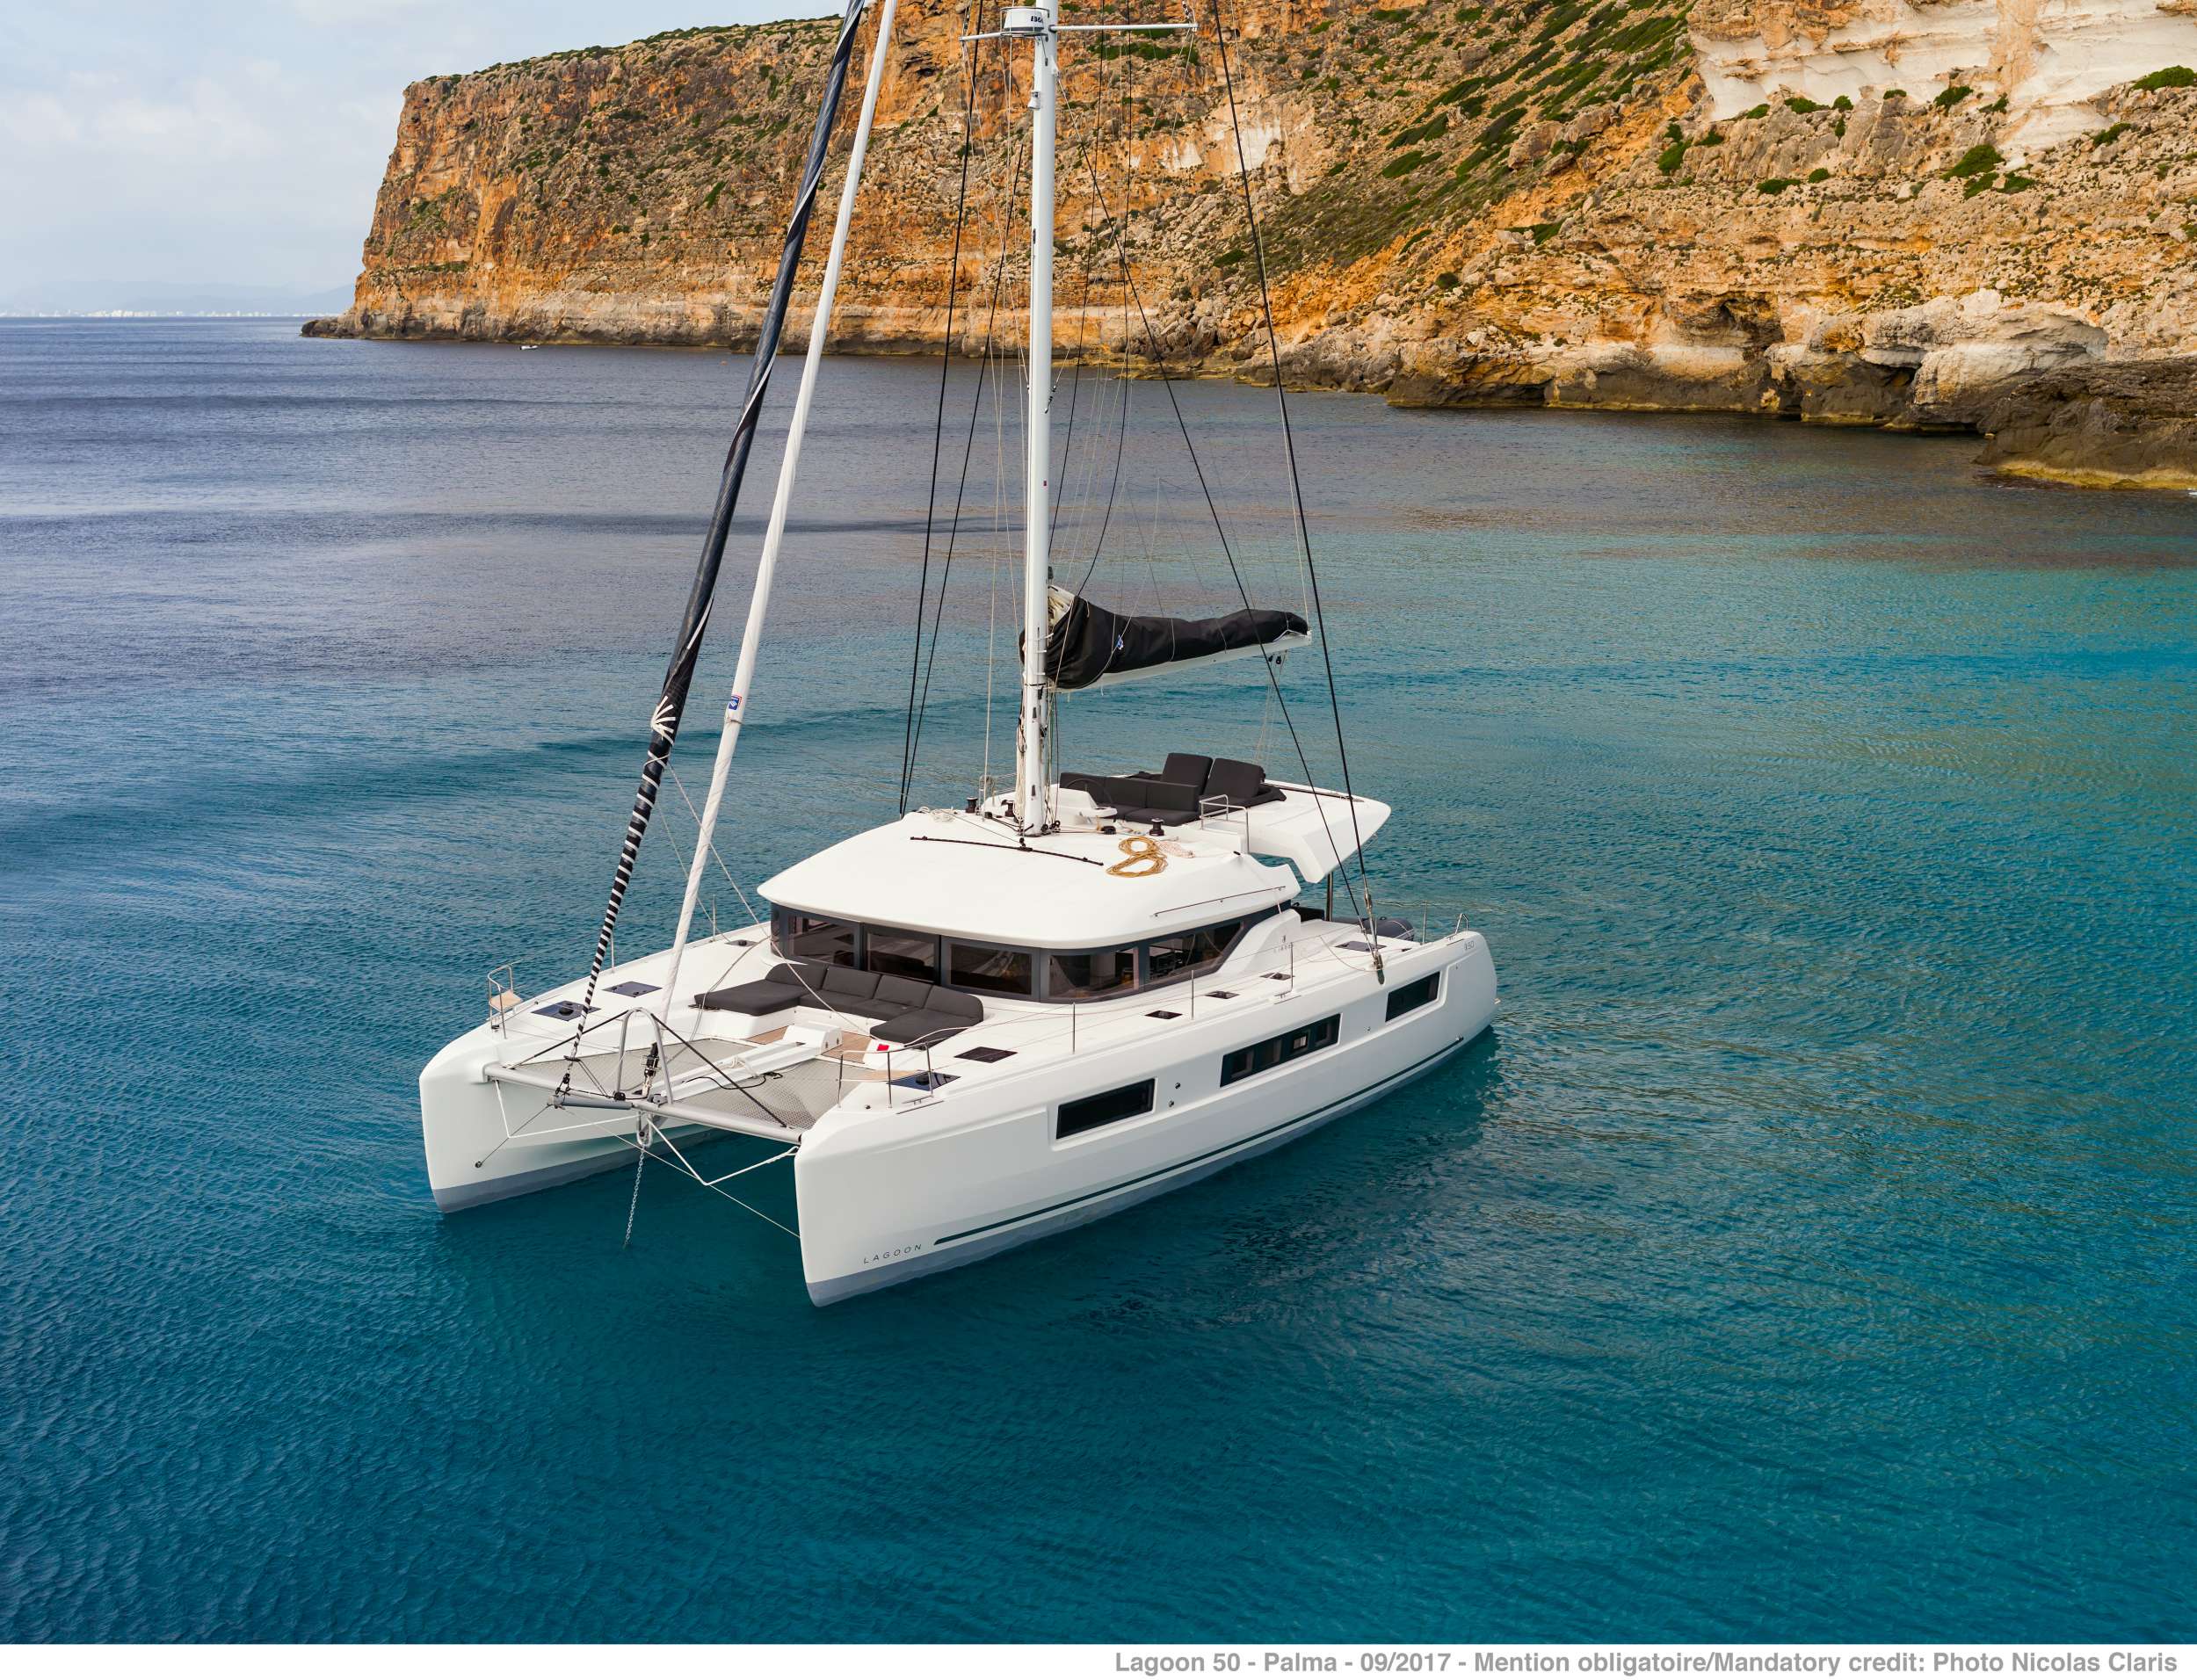 ONEIDA 2 - Catamaran Charter Rhodes & Boat hire in Greece 1